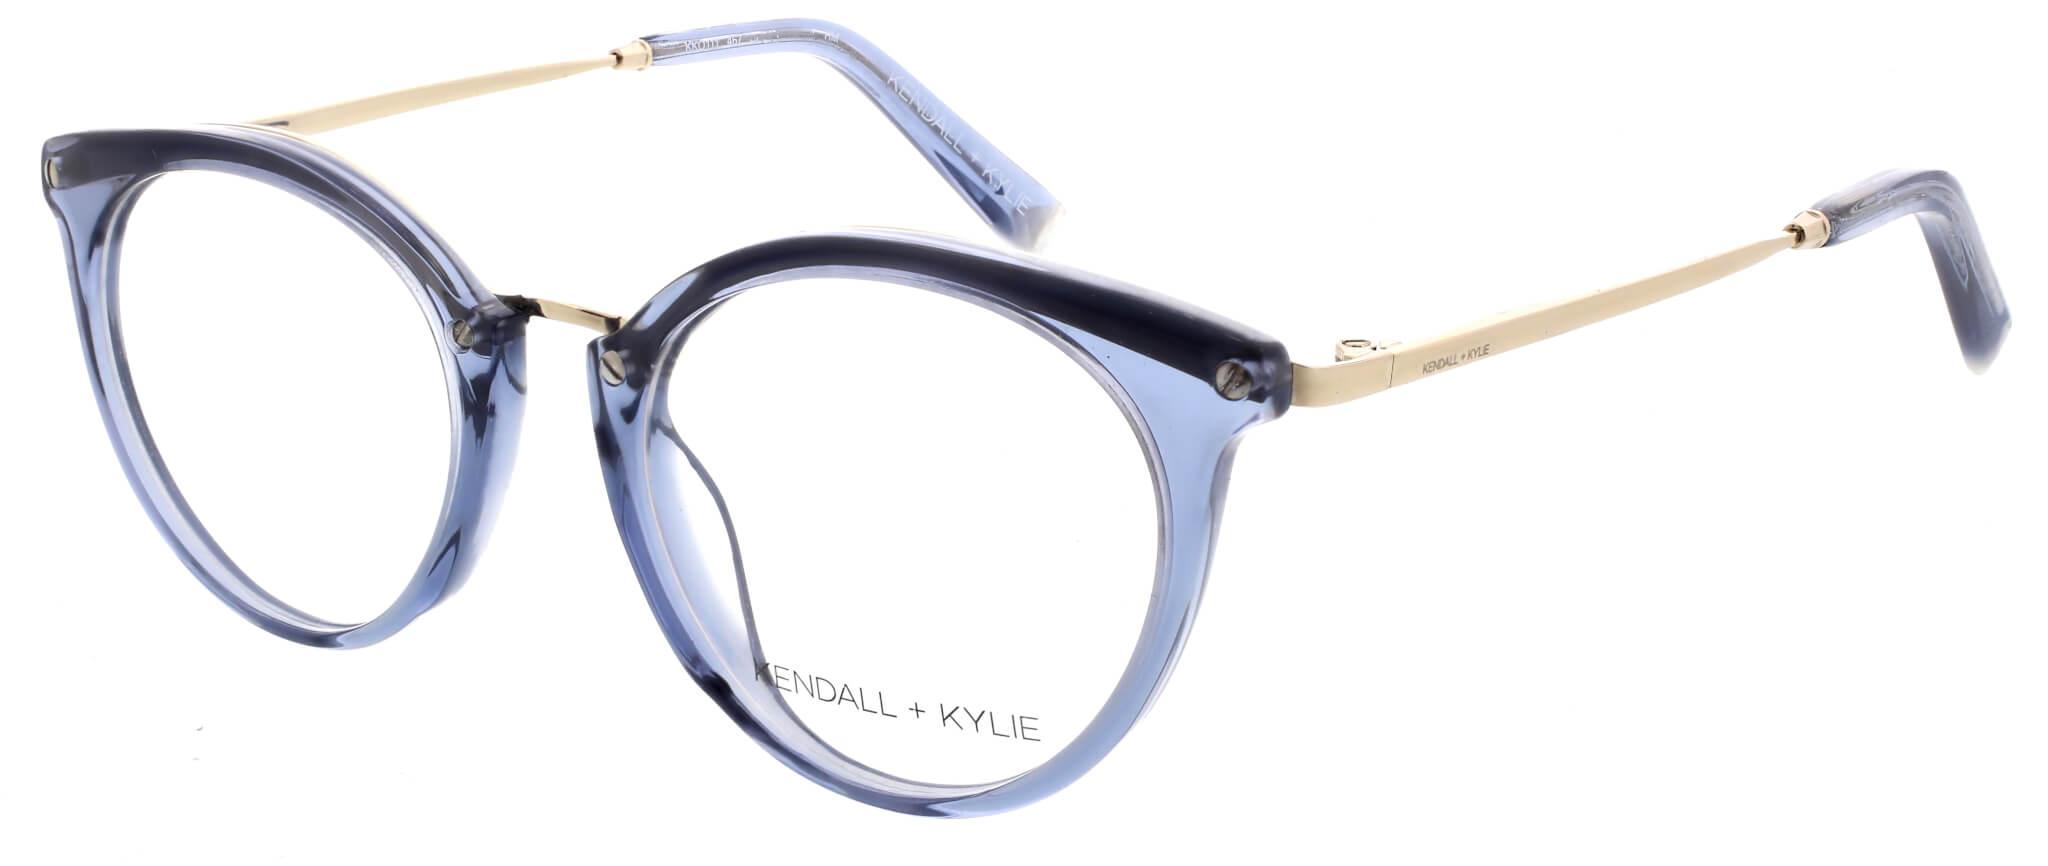 Kendall/Kylie  Shopko Optical